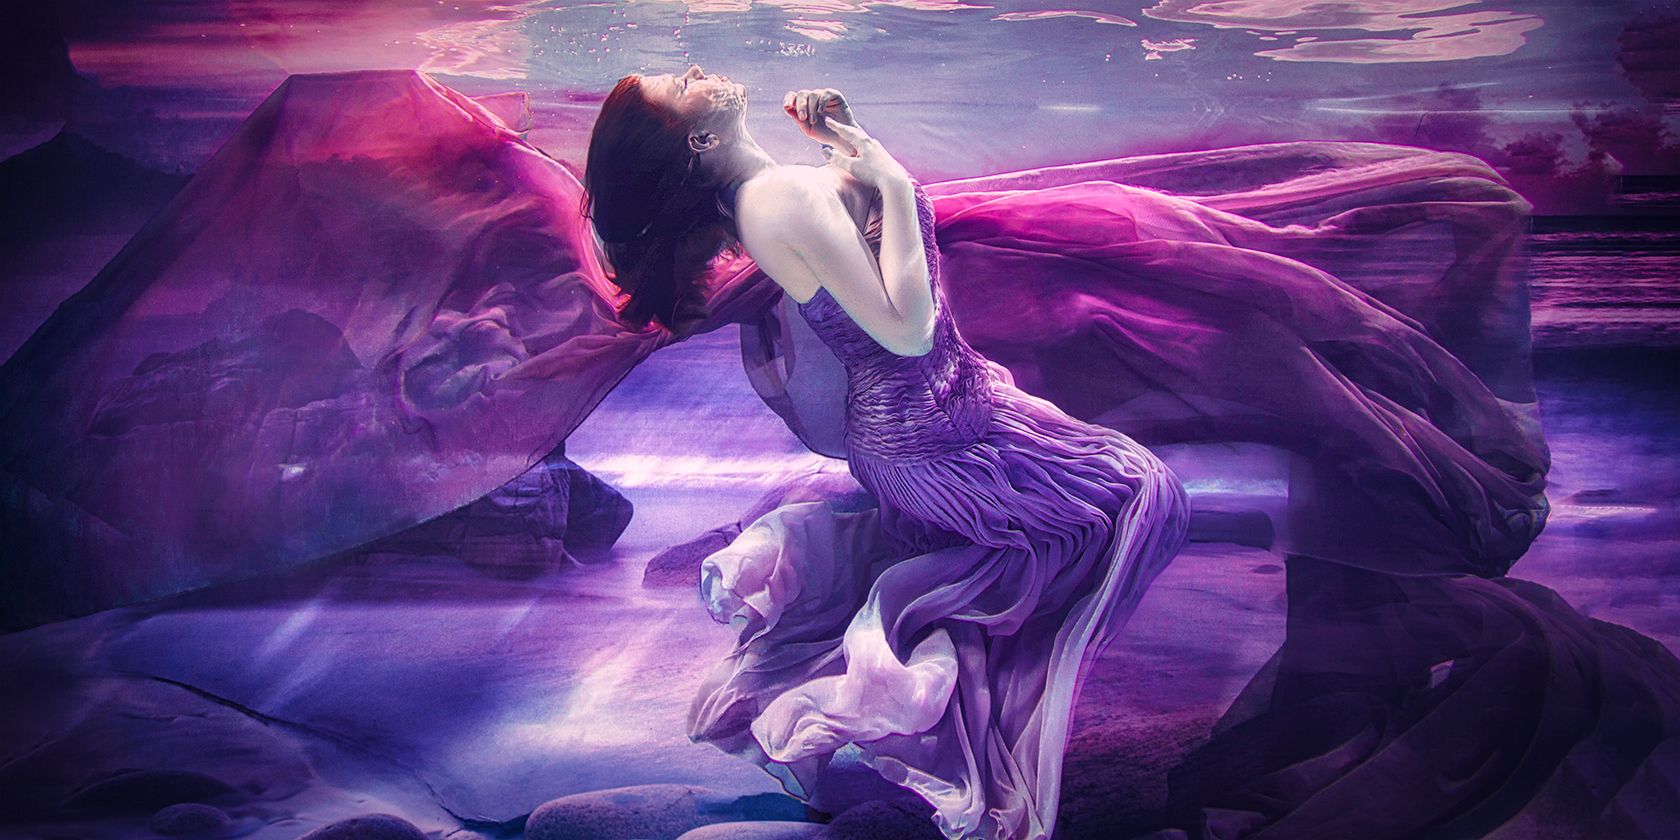 Underwater Image of Woman in Purple Dress